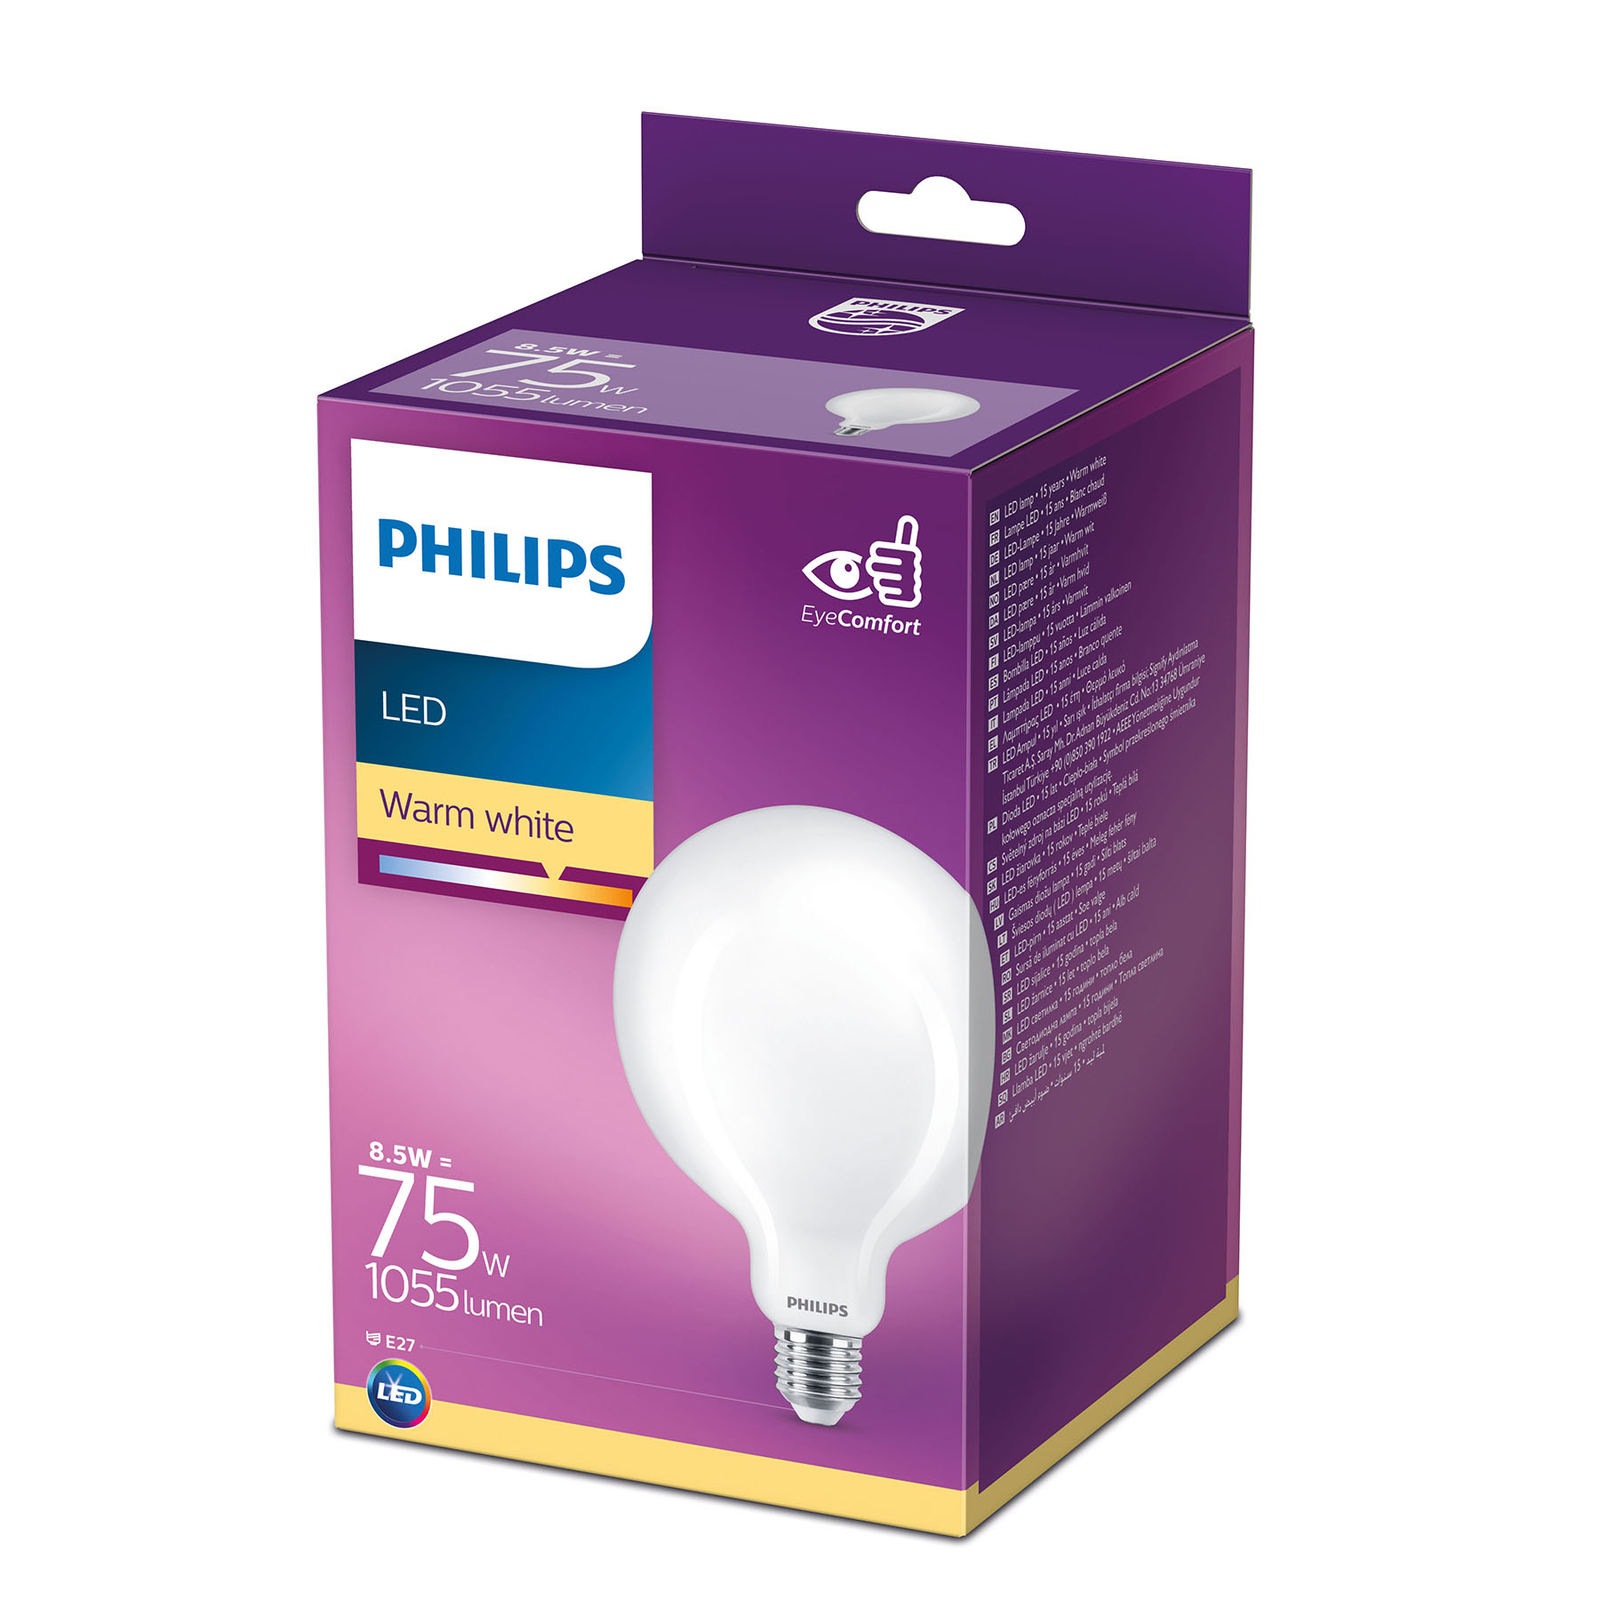 Philips Classic LED globe bulb E27 G120 8.5W matt